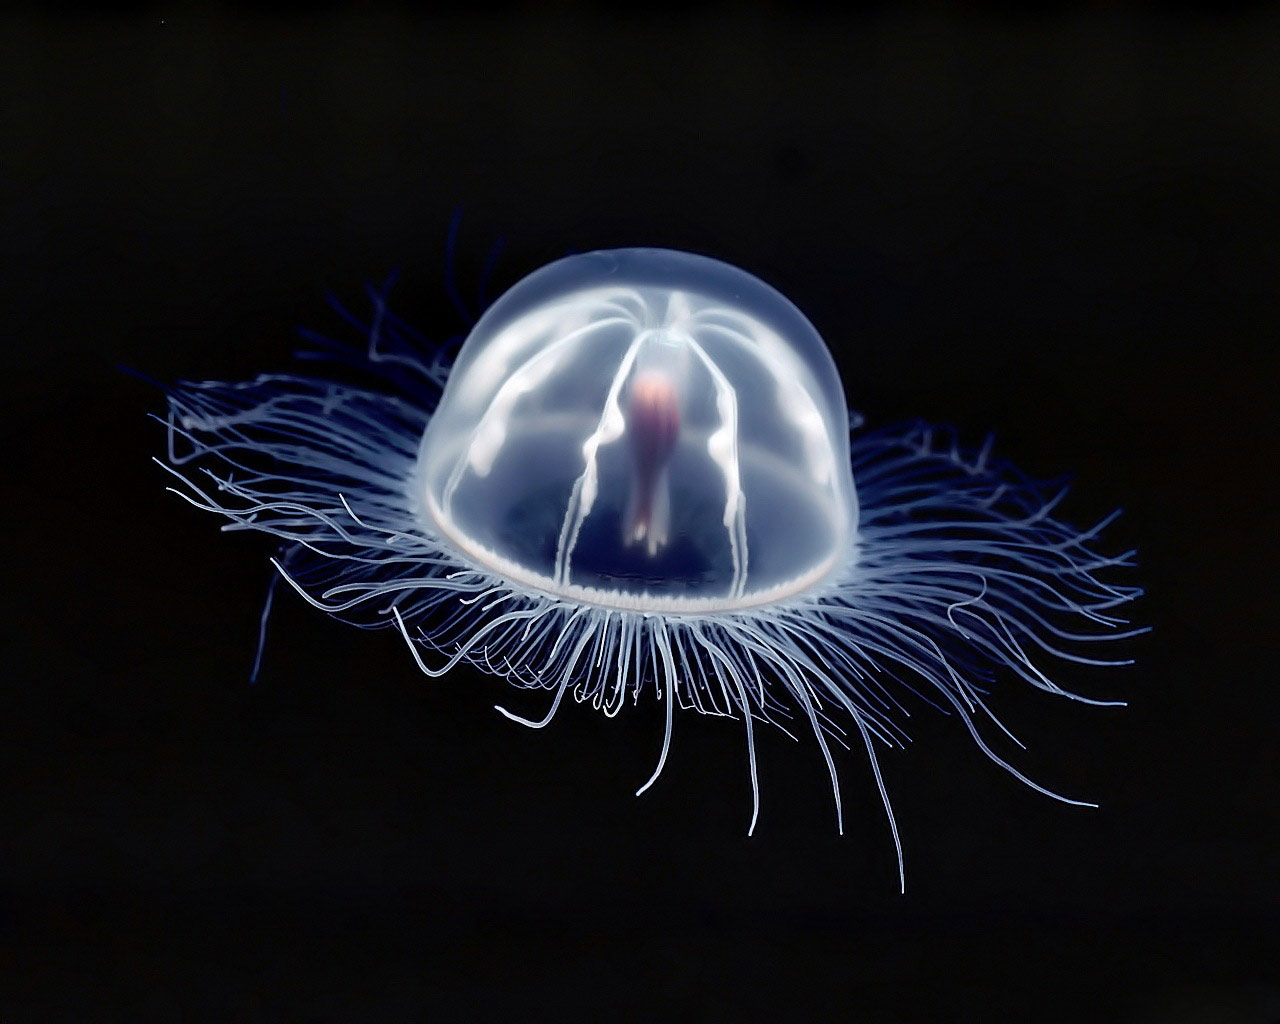 Jellyfish Wallpaper Funny Animals